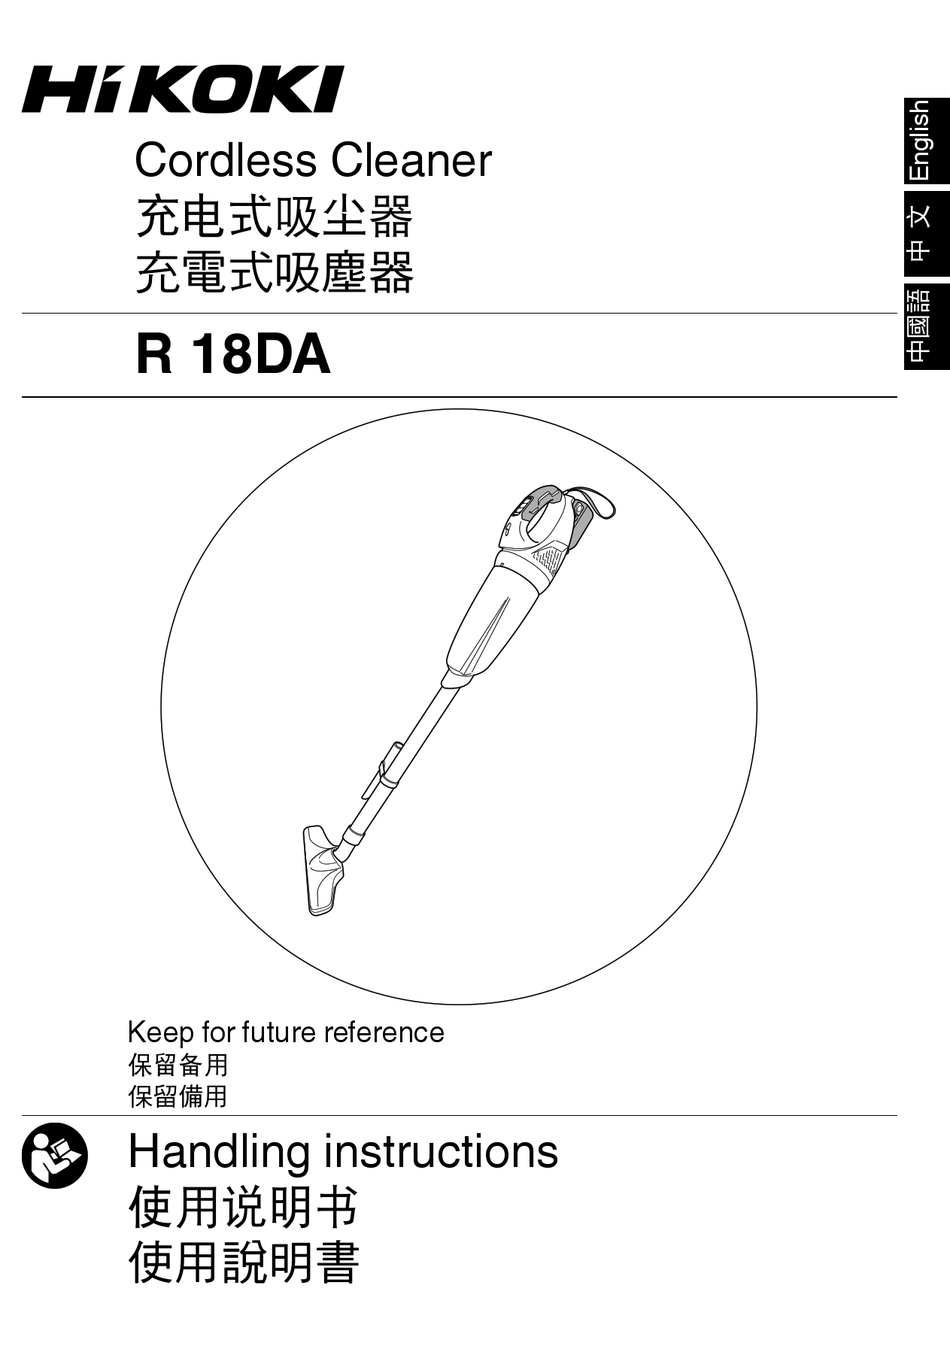 鋰離子電池使用注意事項- HIKOKI R 18DA Handling Instructions Manual